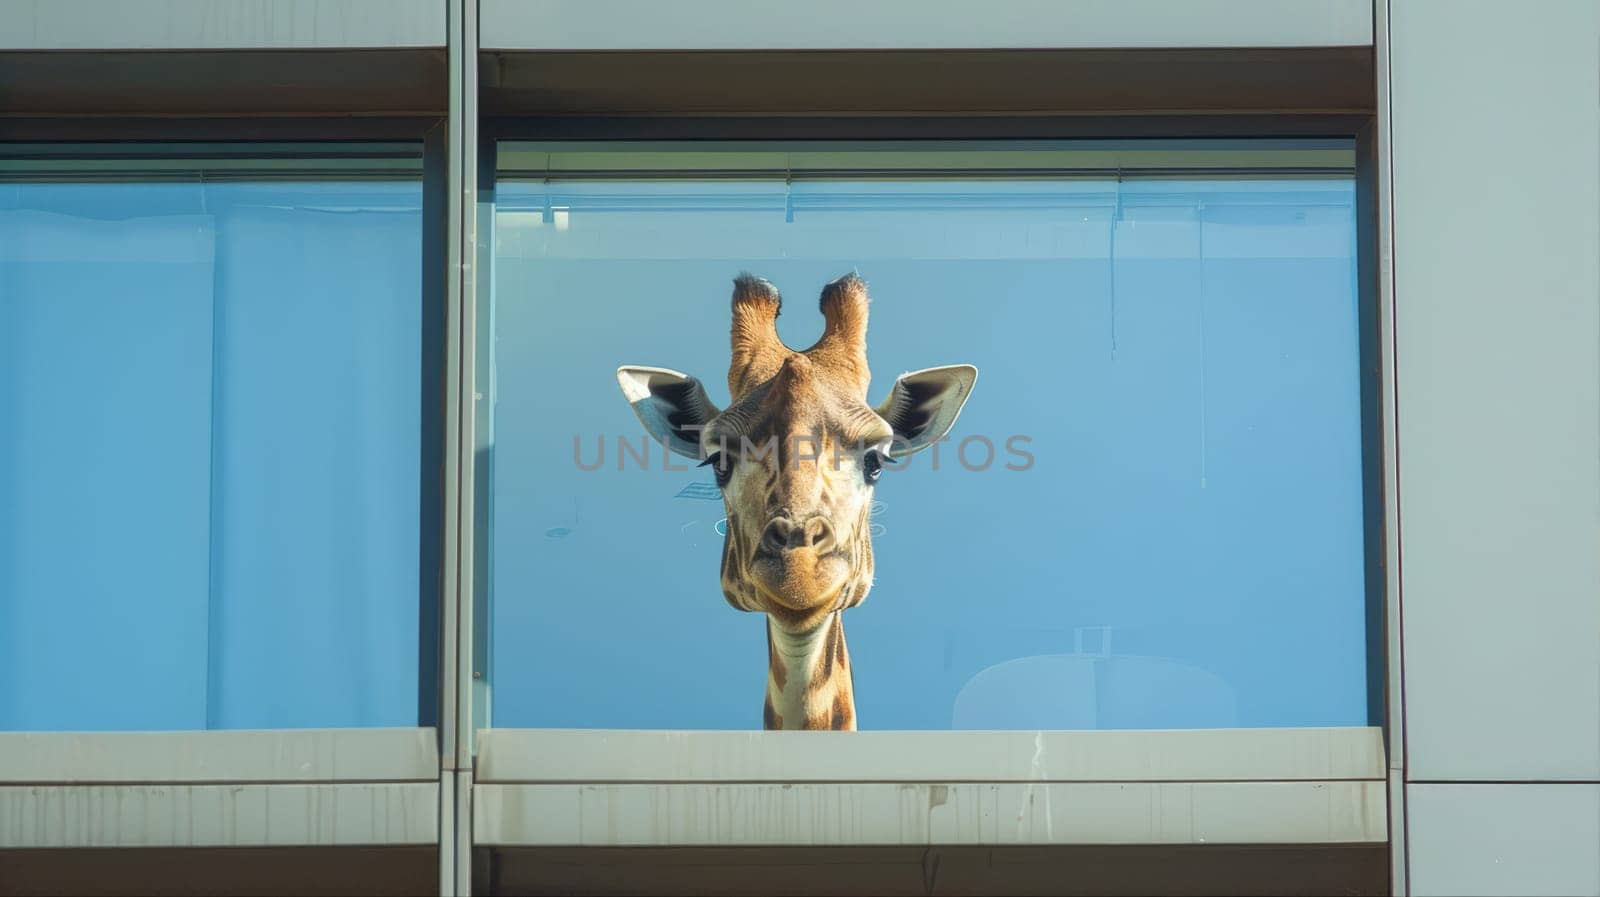 Giraffe in the city. A giraffe near the window of an office building. by natali_brill